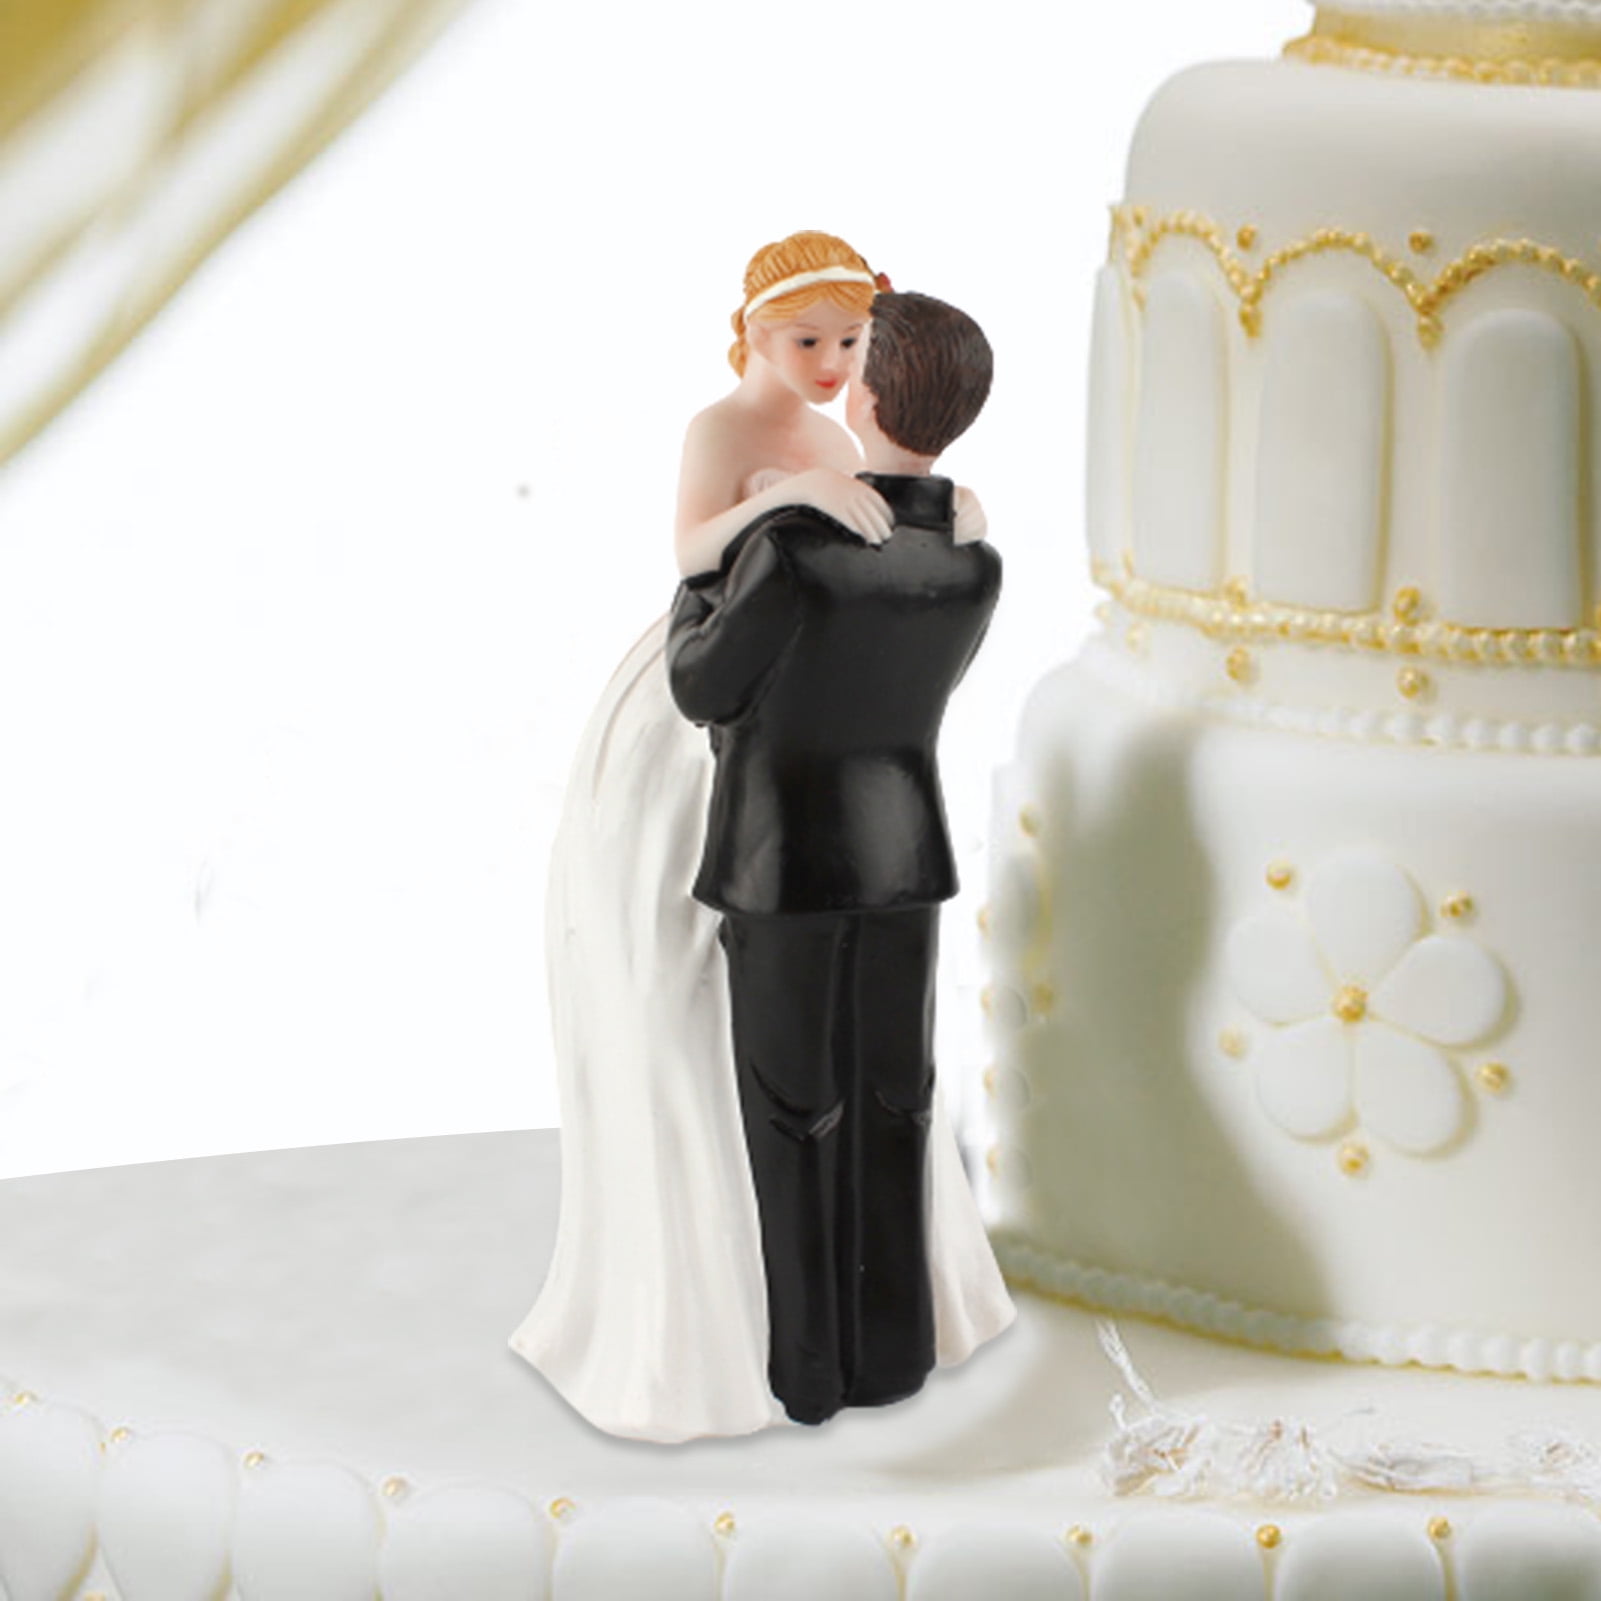 Mini Bride Groom Figurine Cake Cup Cake Topper Party Favor Wedding Anniversary 